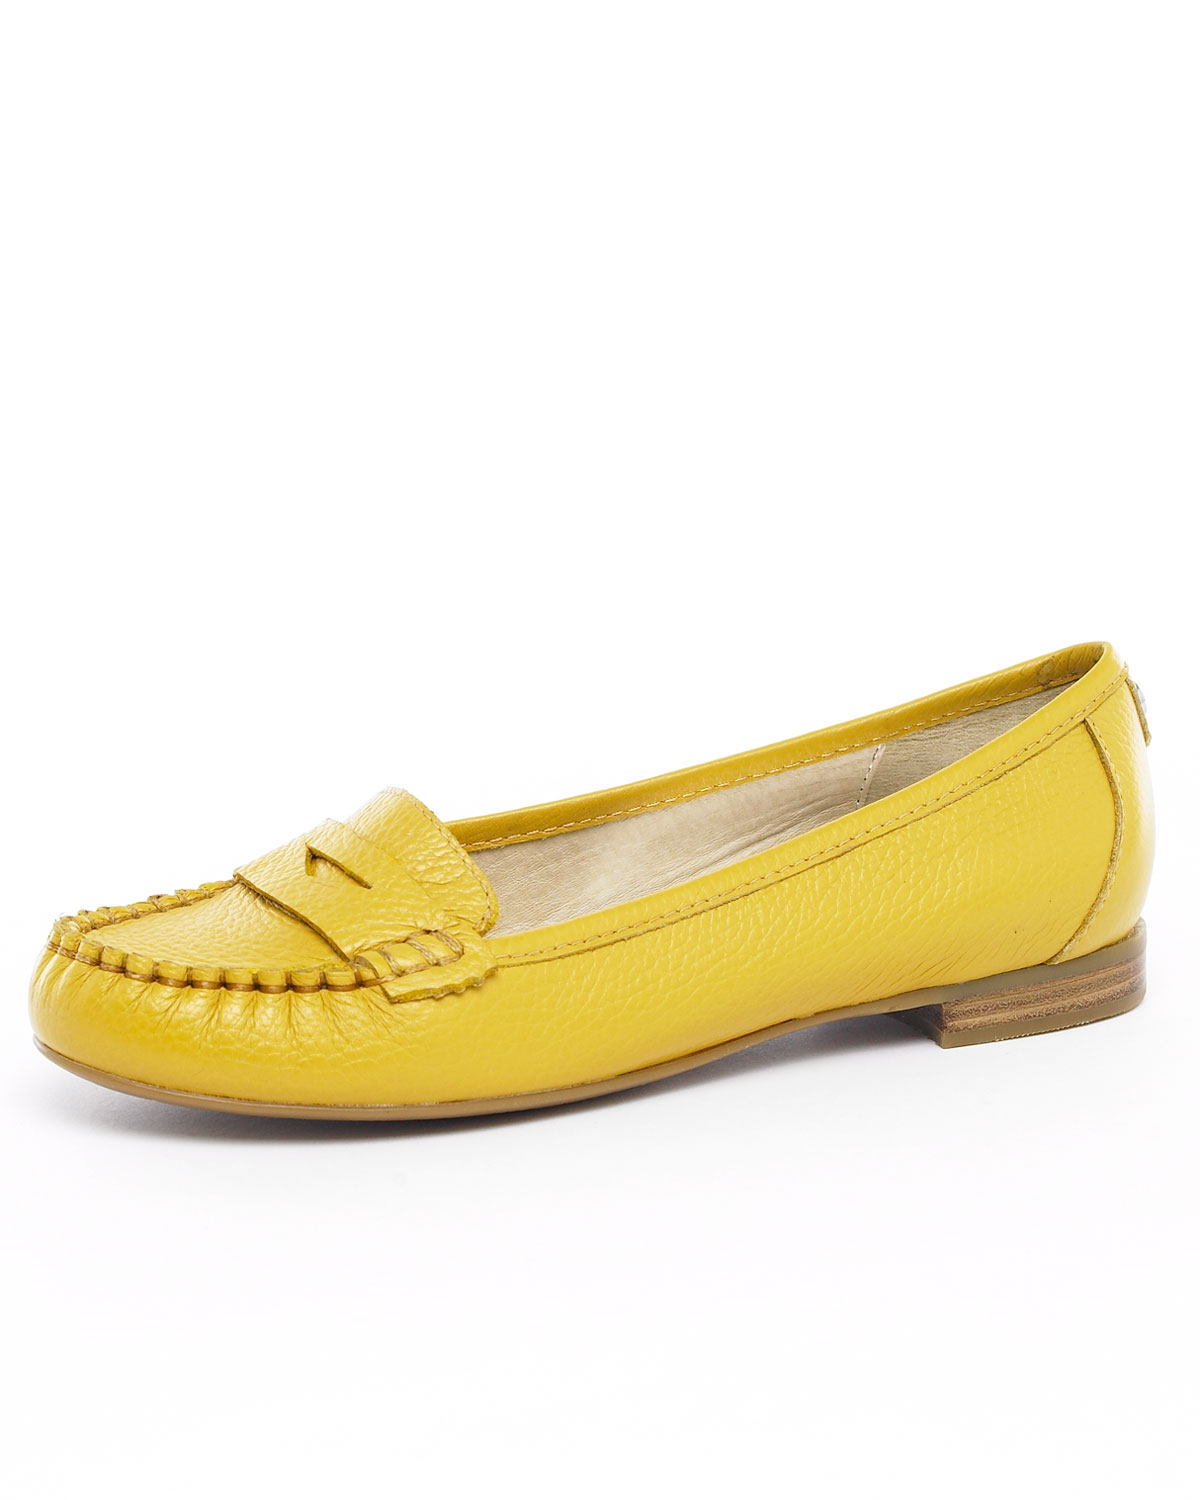 Lyst - Michael michael kors Winsor Flat Loafers in Yellow